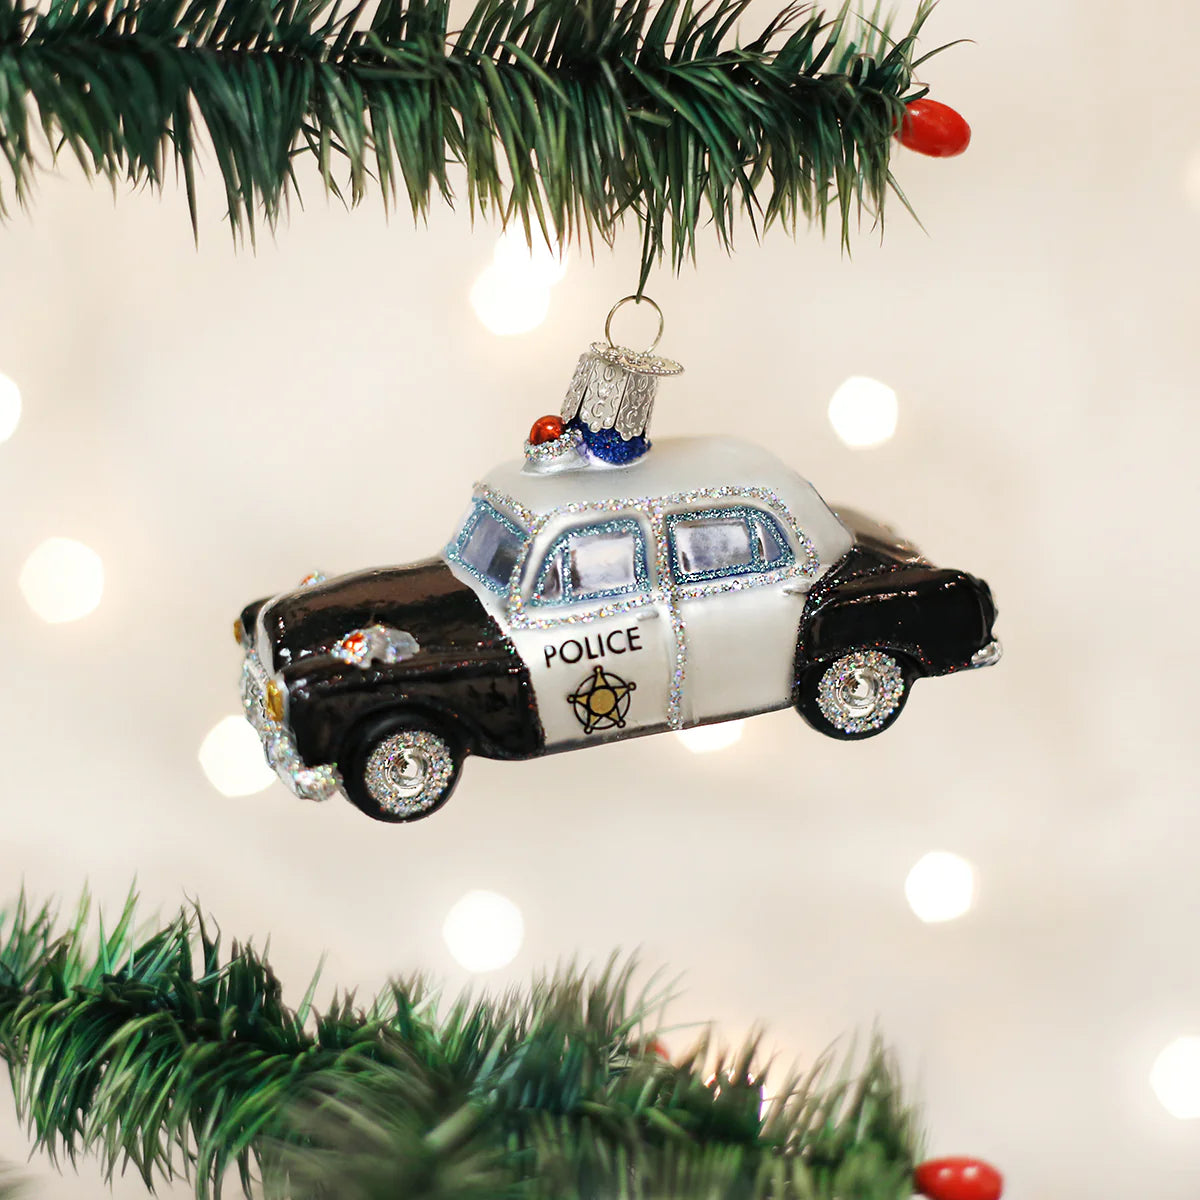 Old World Christmas - Police Car Ornament